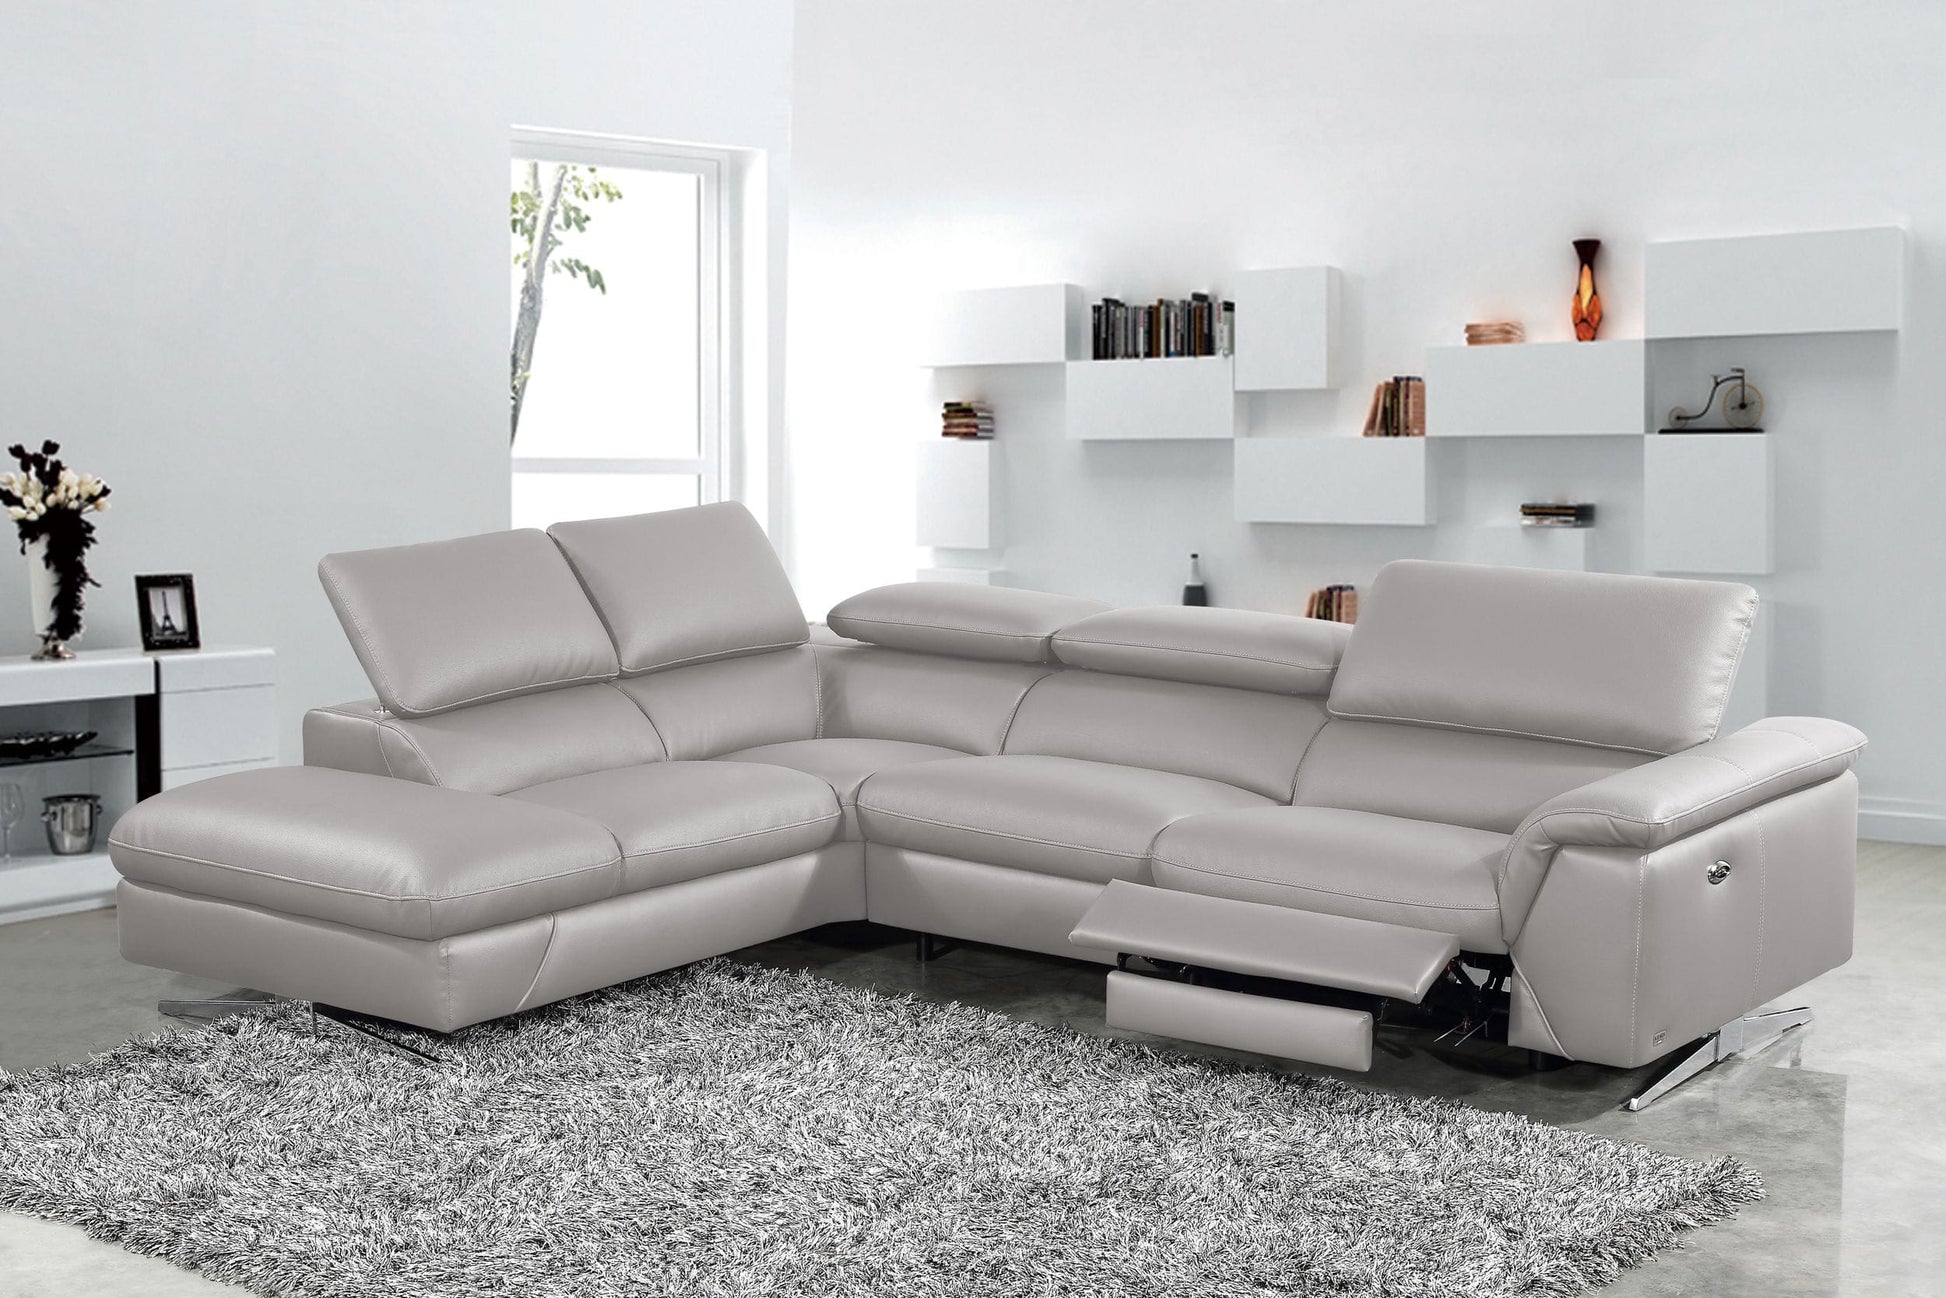 VIG Furniture Divani Casa Maine Grey Leather Left Sectional Sofa Recliner